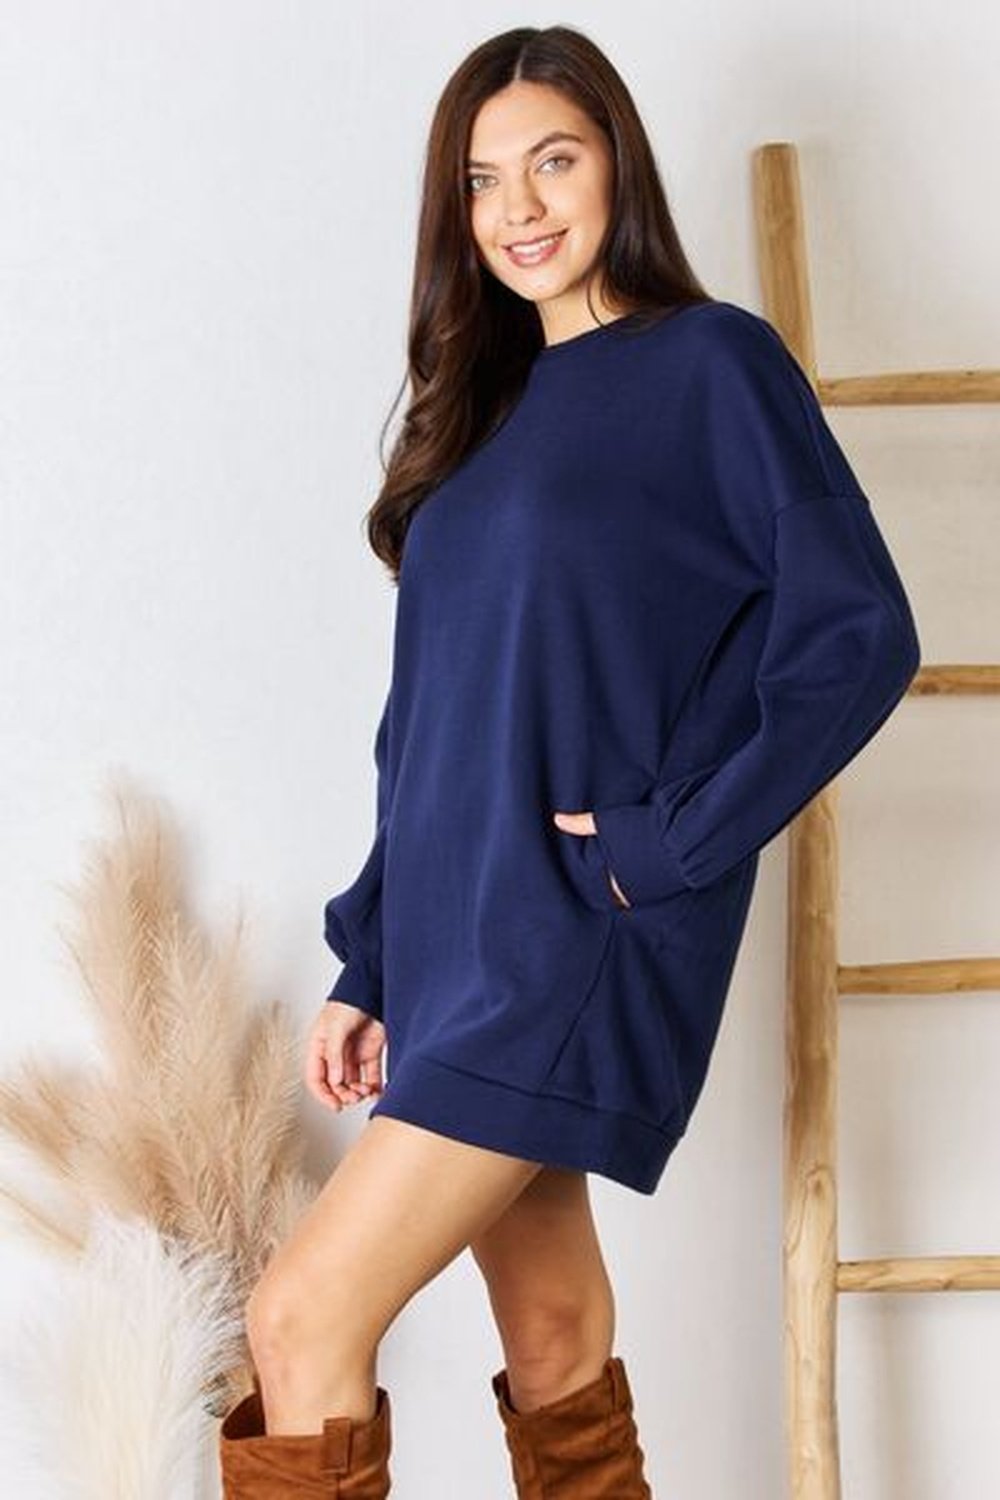 Zenana Oversized Round Neck Long Sleeve Sweatshirt - Pullover Sweaters - FITGGINS